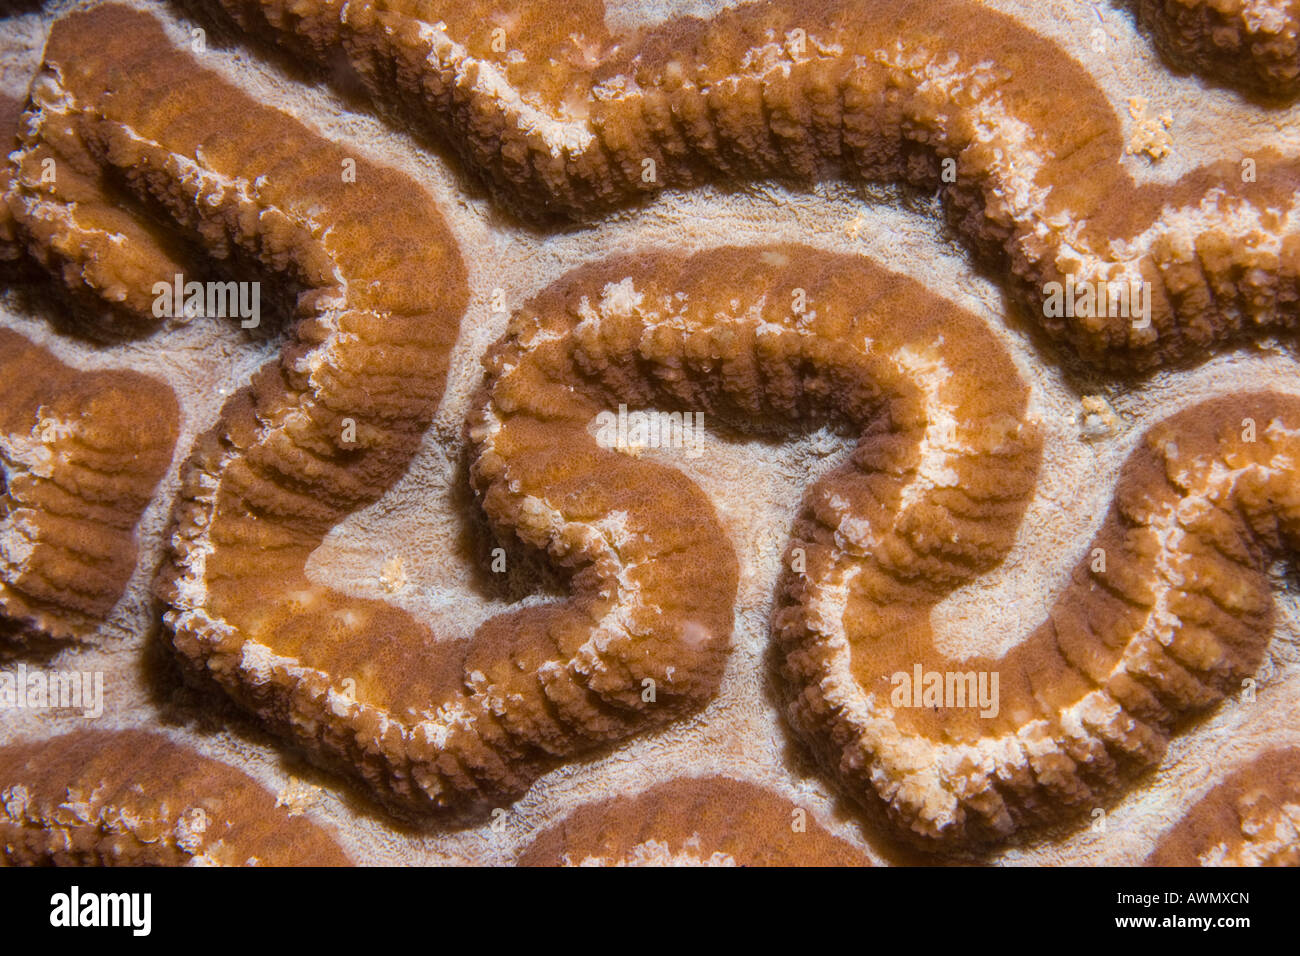 Brain coral Platygyra daedalea in the Bunaken underwater national park, Indonesia. Stock Photo